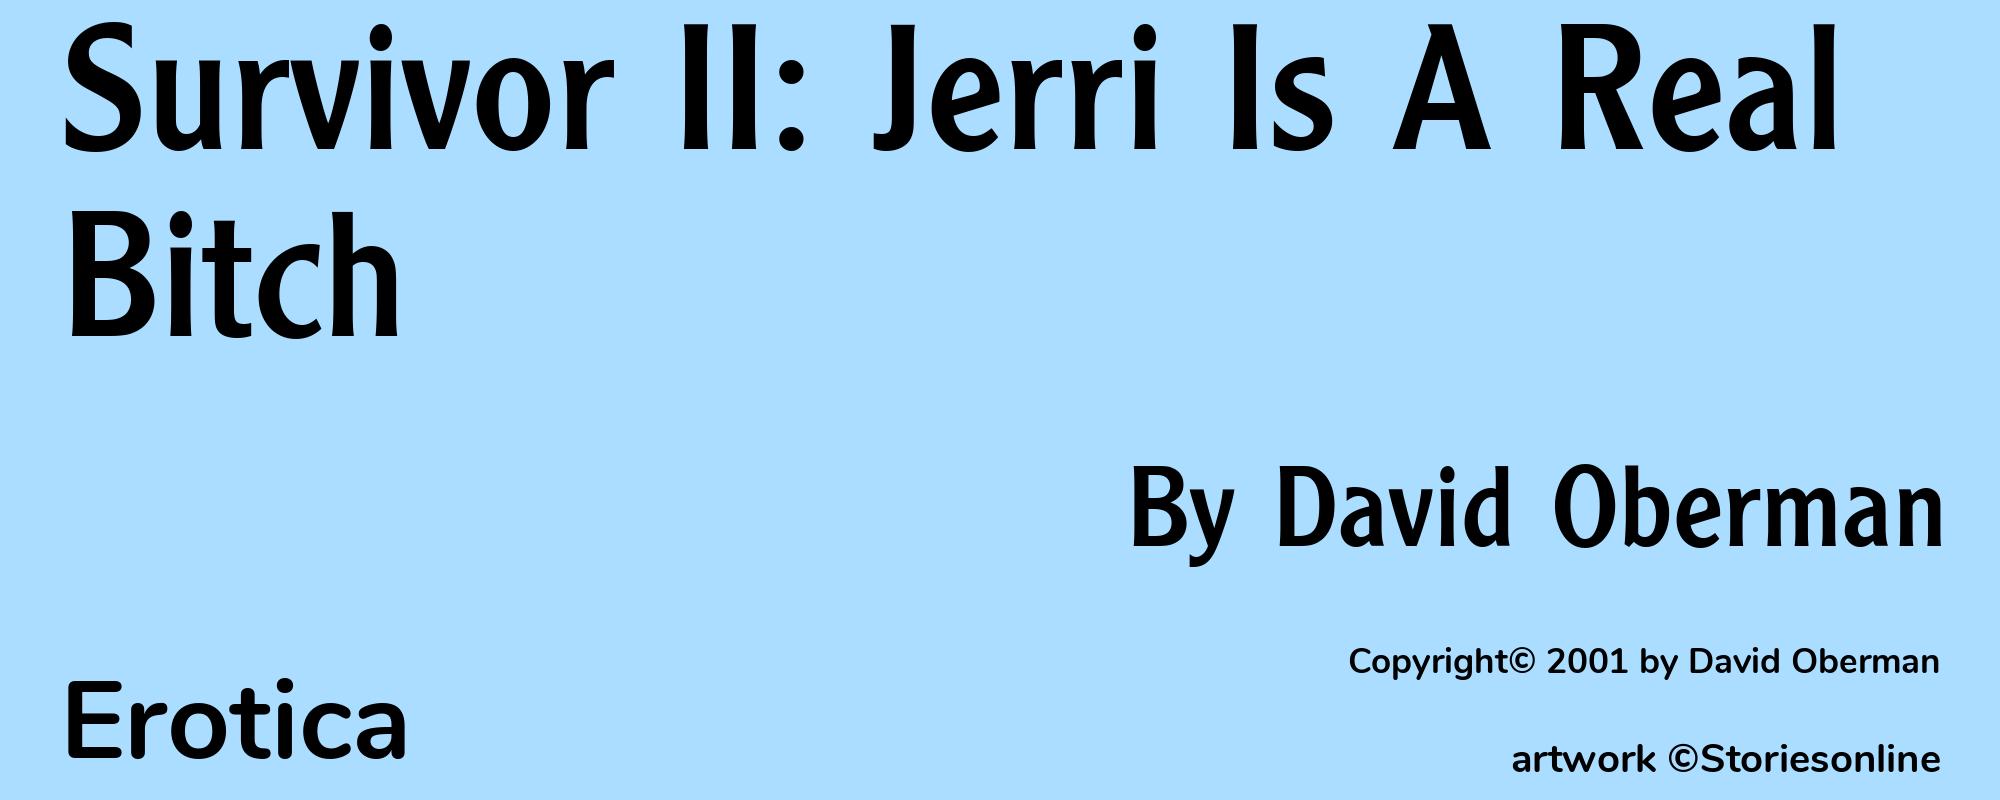 Survivor II: Jerri Is A Real Bitch - Cover